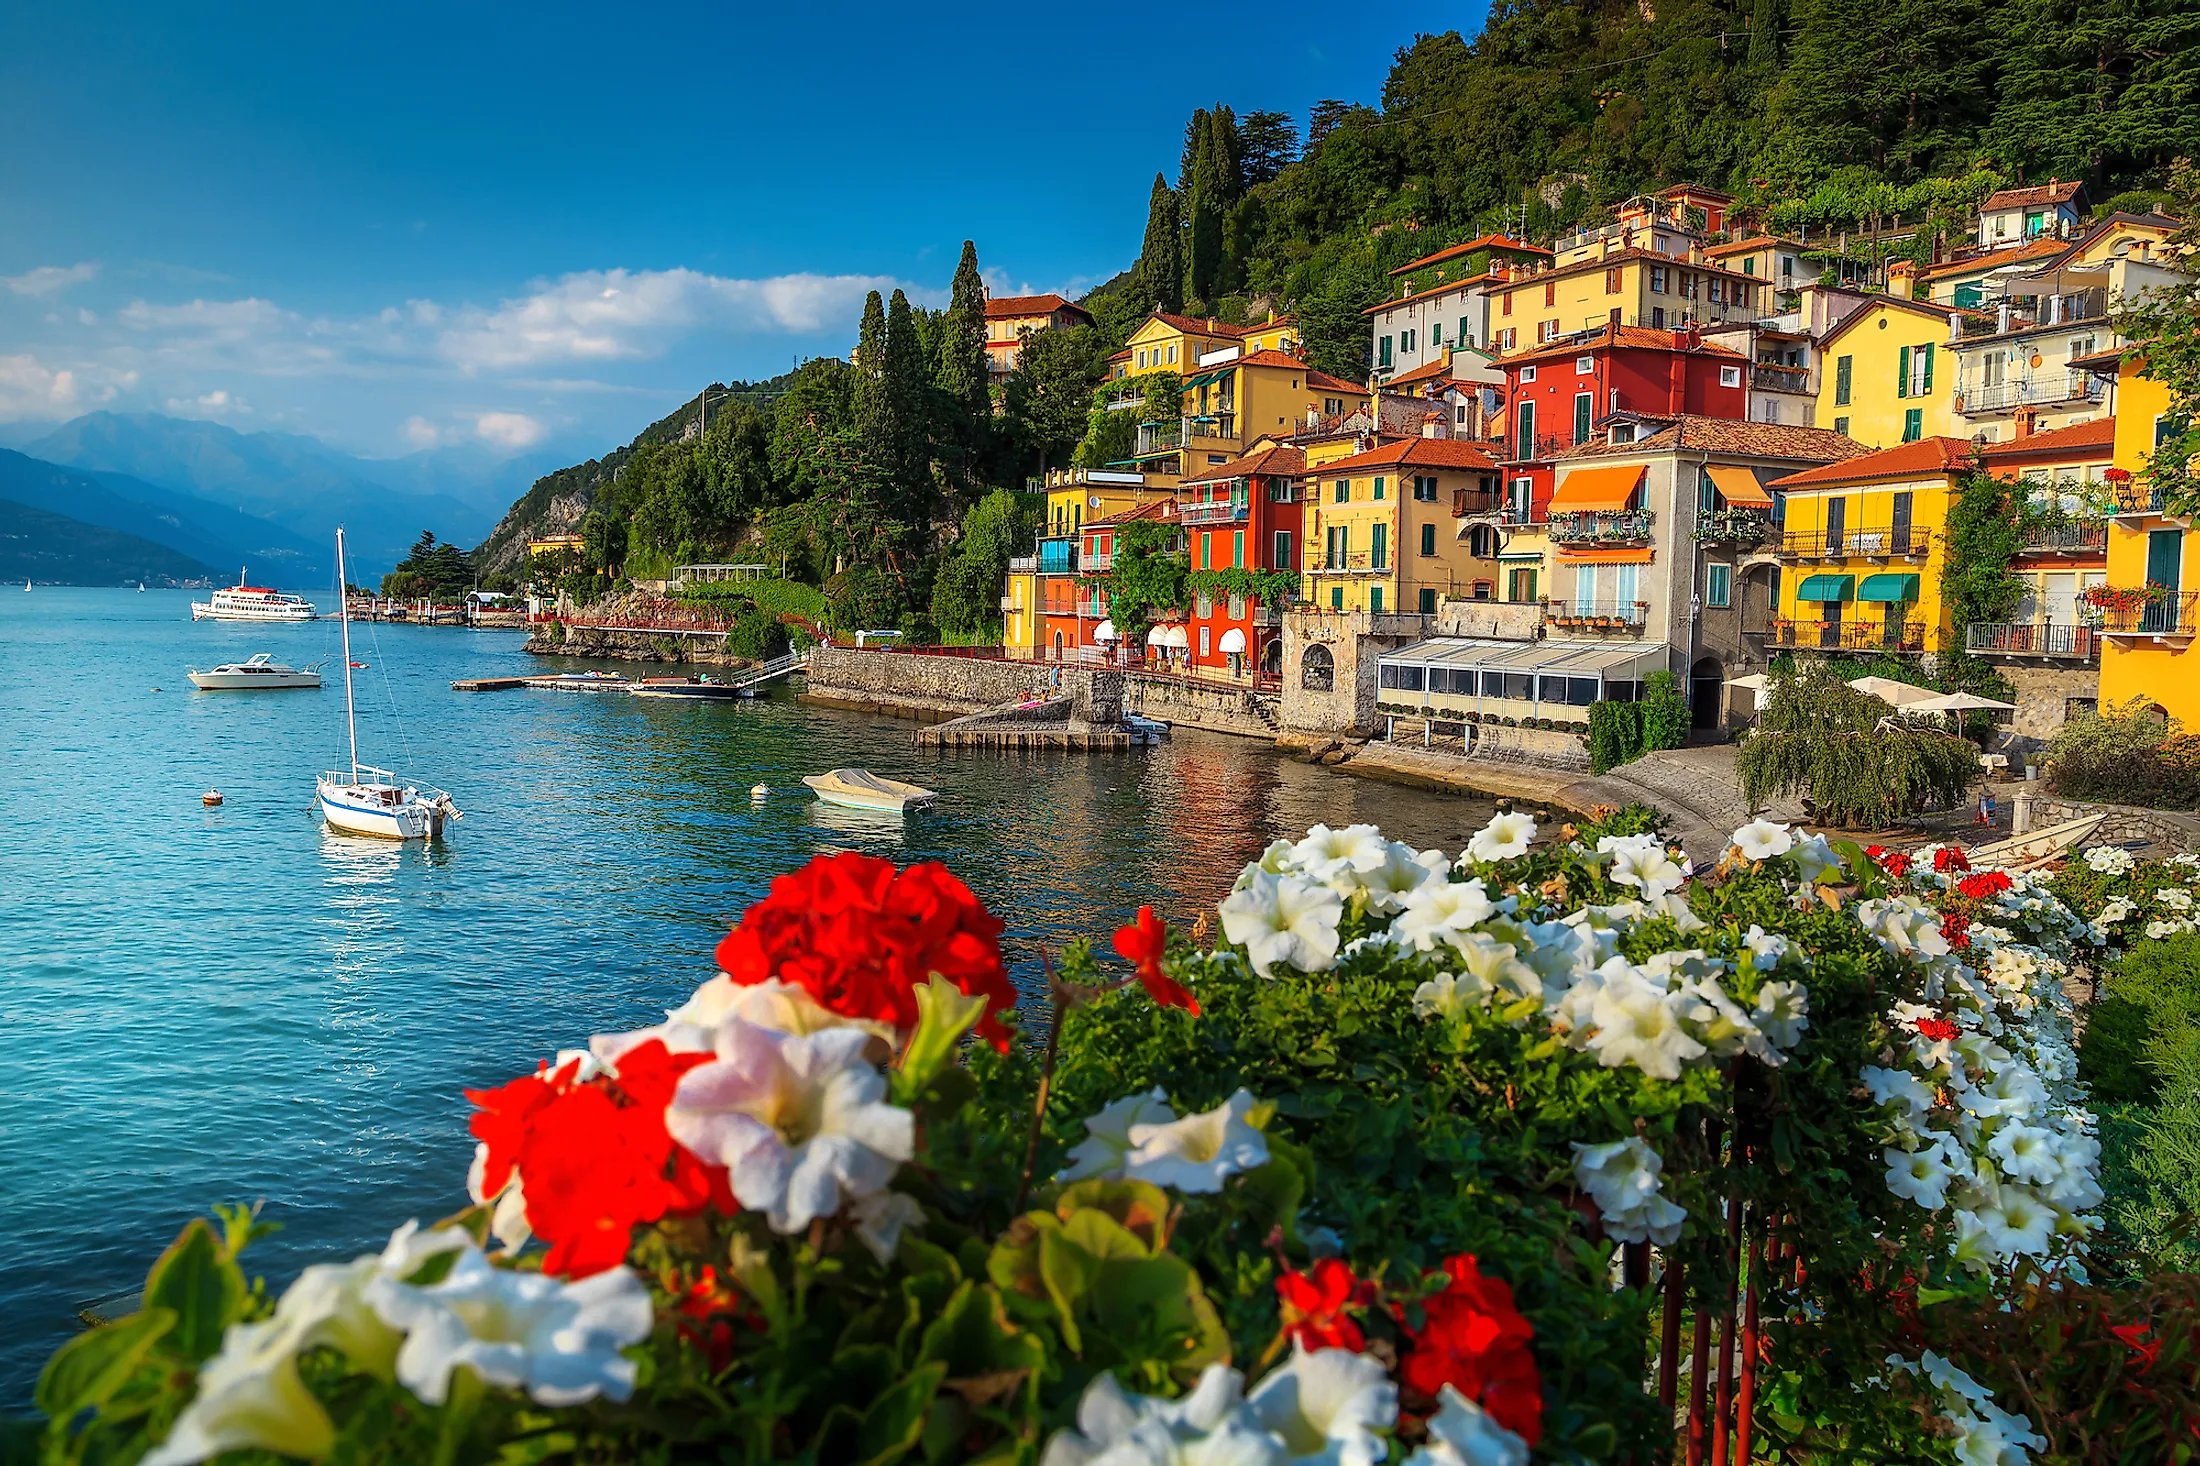 Lake Como, Italy - Europe's 10 Most Stunning Lakes